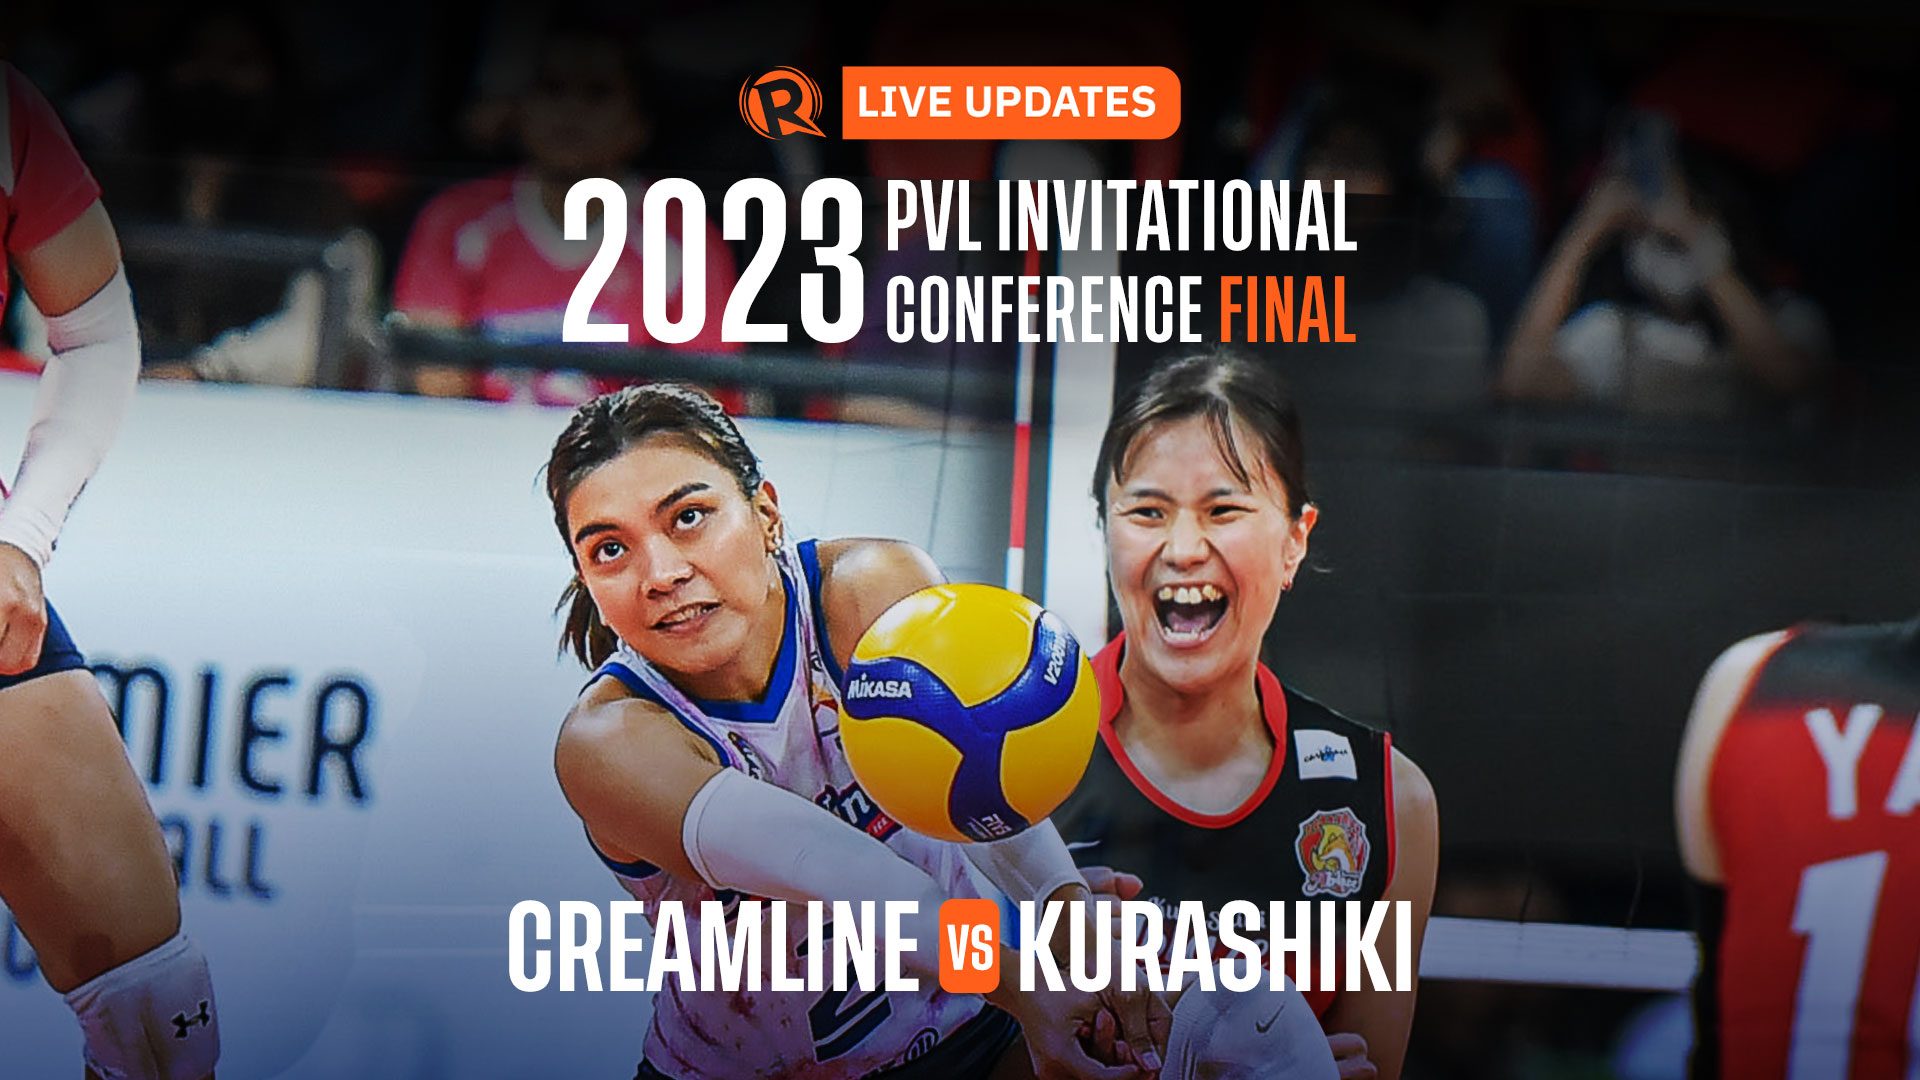 HIGHLIGHTS: Creamline vs Kurashiki – PVL Invitational Conference Final